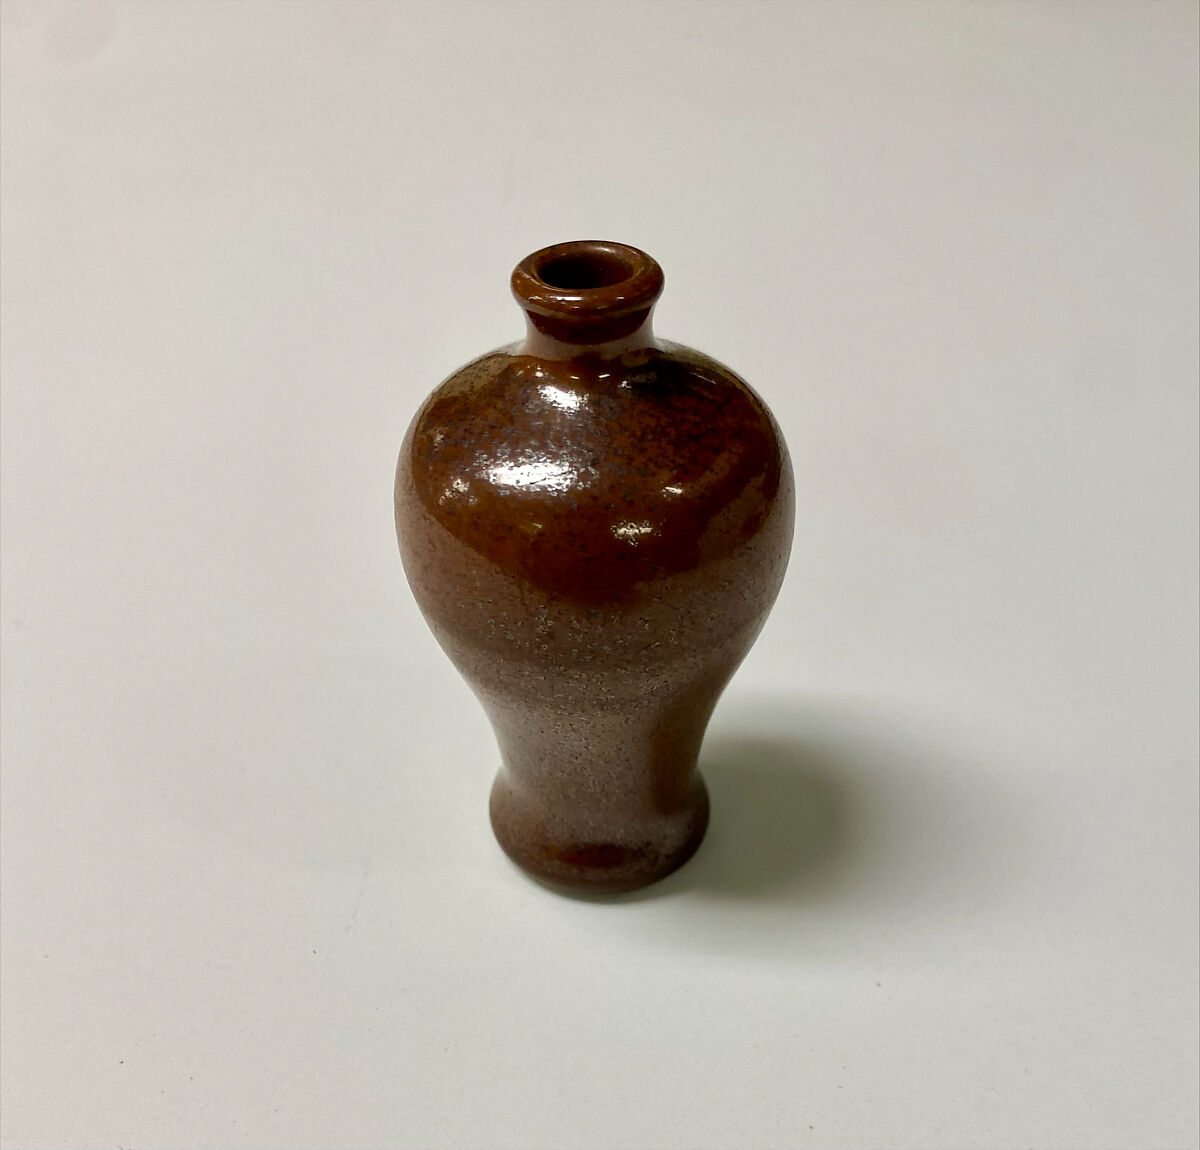 Minature meiping vase, Porcelain with iron rust glaze (Jingdezhen ware), China 